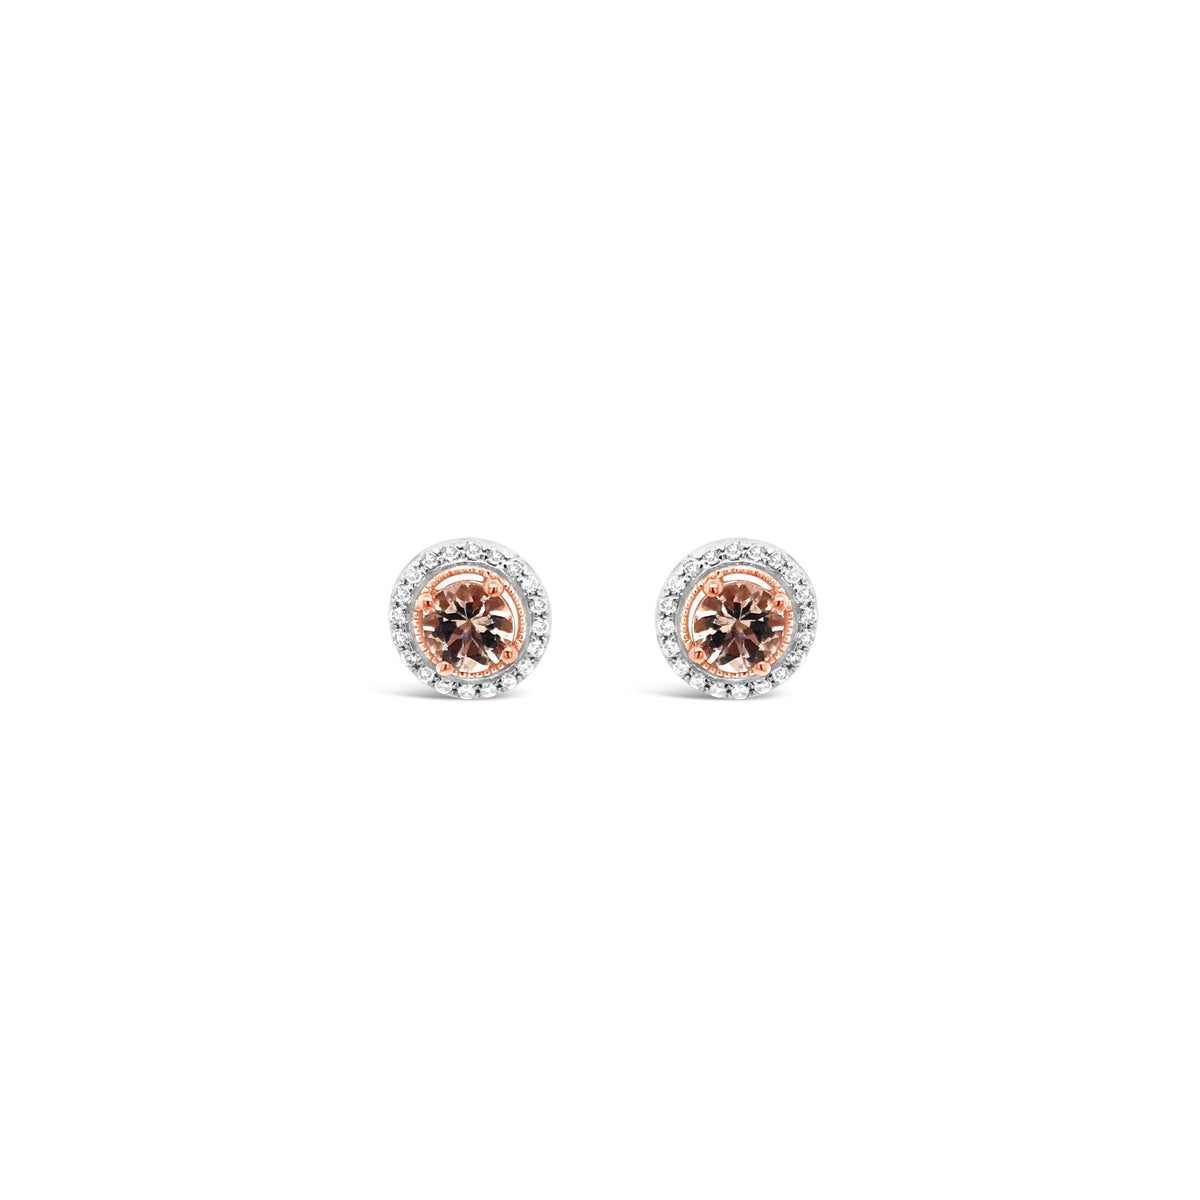 Morganite and diamond halo earrings - Duffs Jewellers